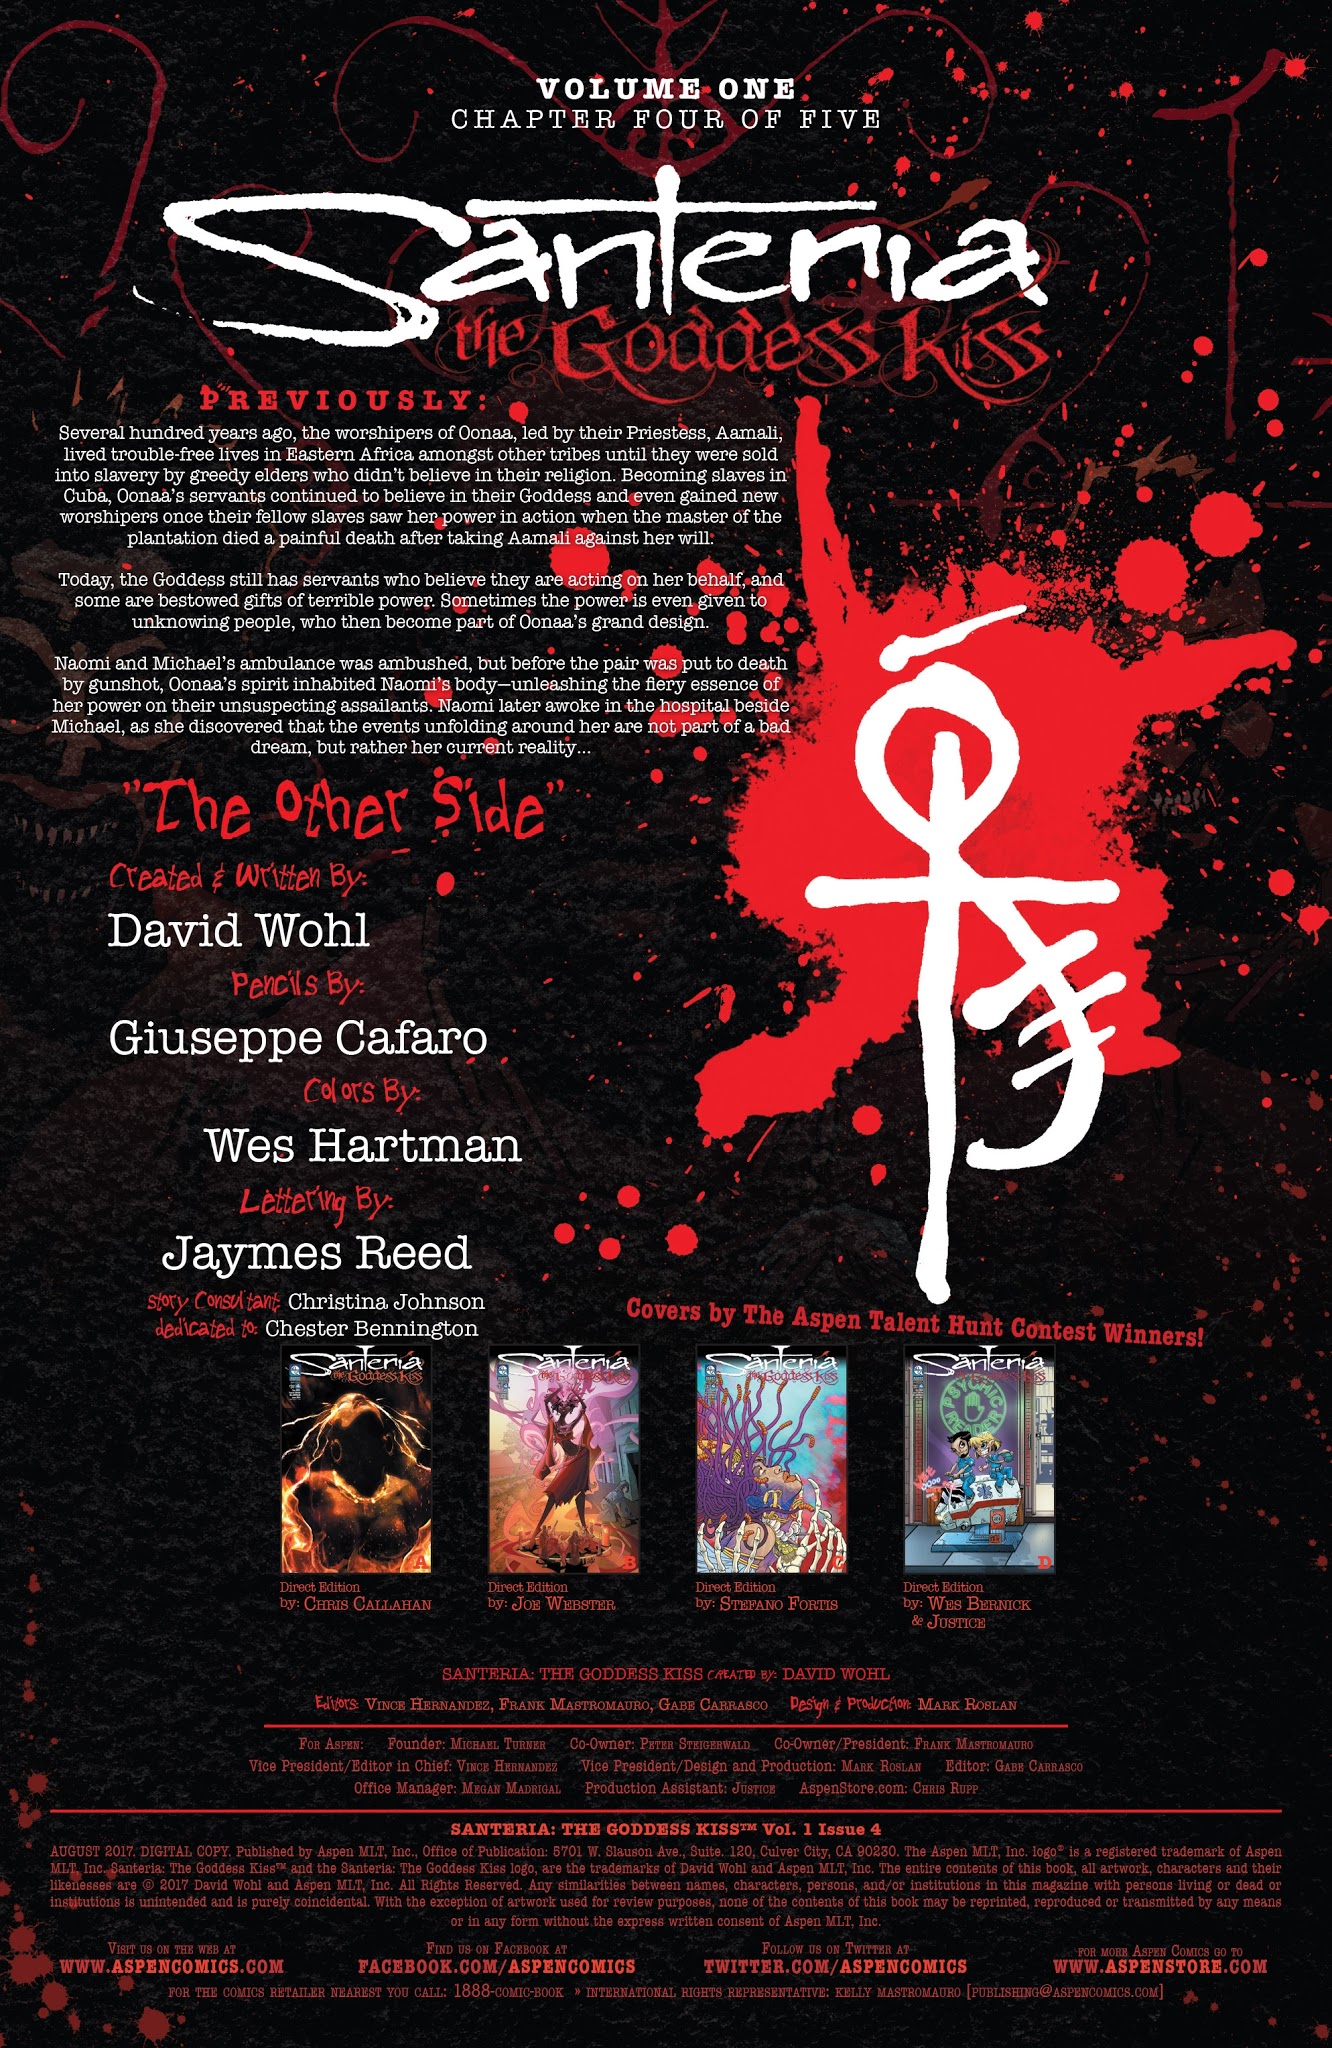 Read online Santeria: The Goddess Kiss comic -  Issue #4 - 5